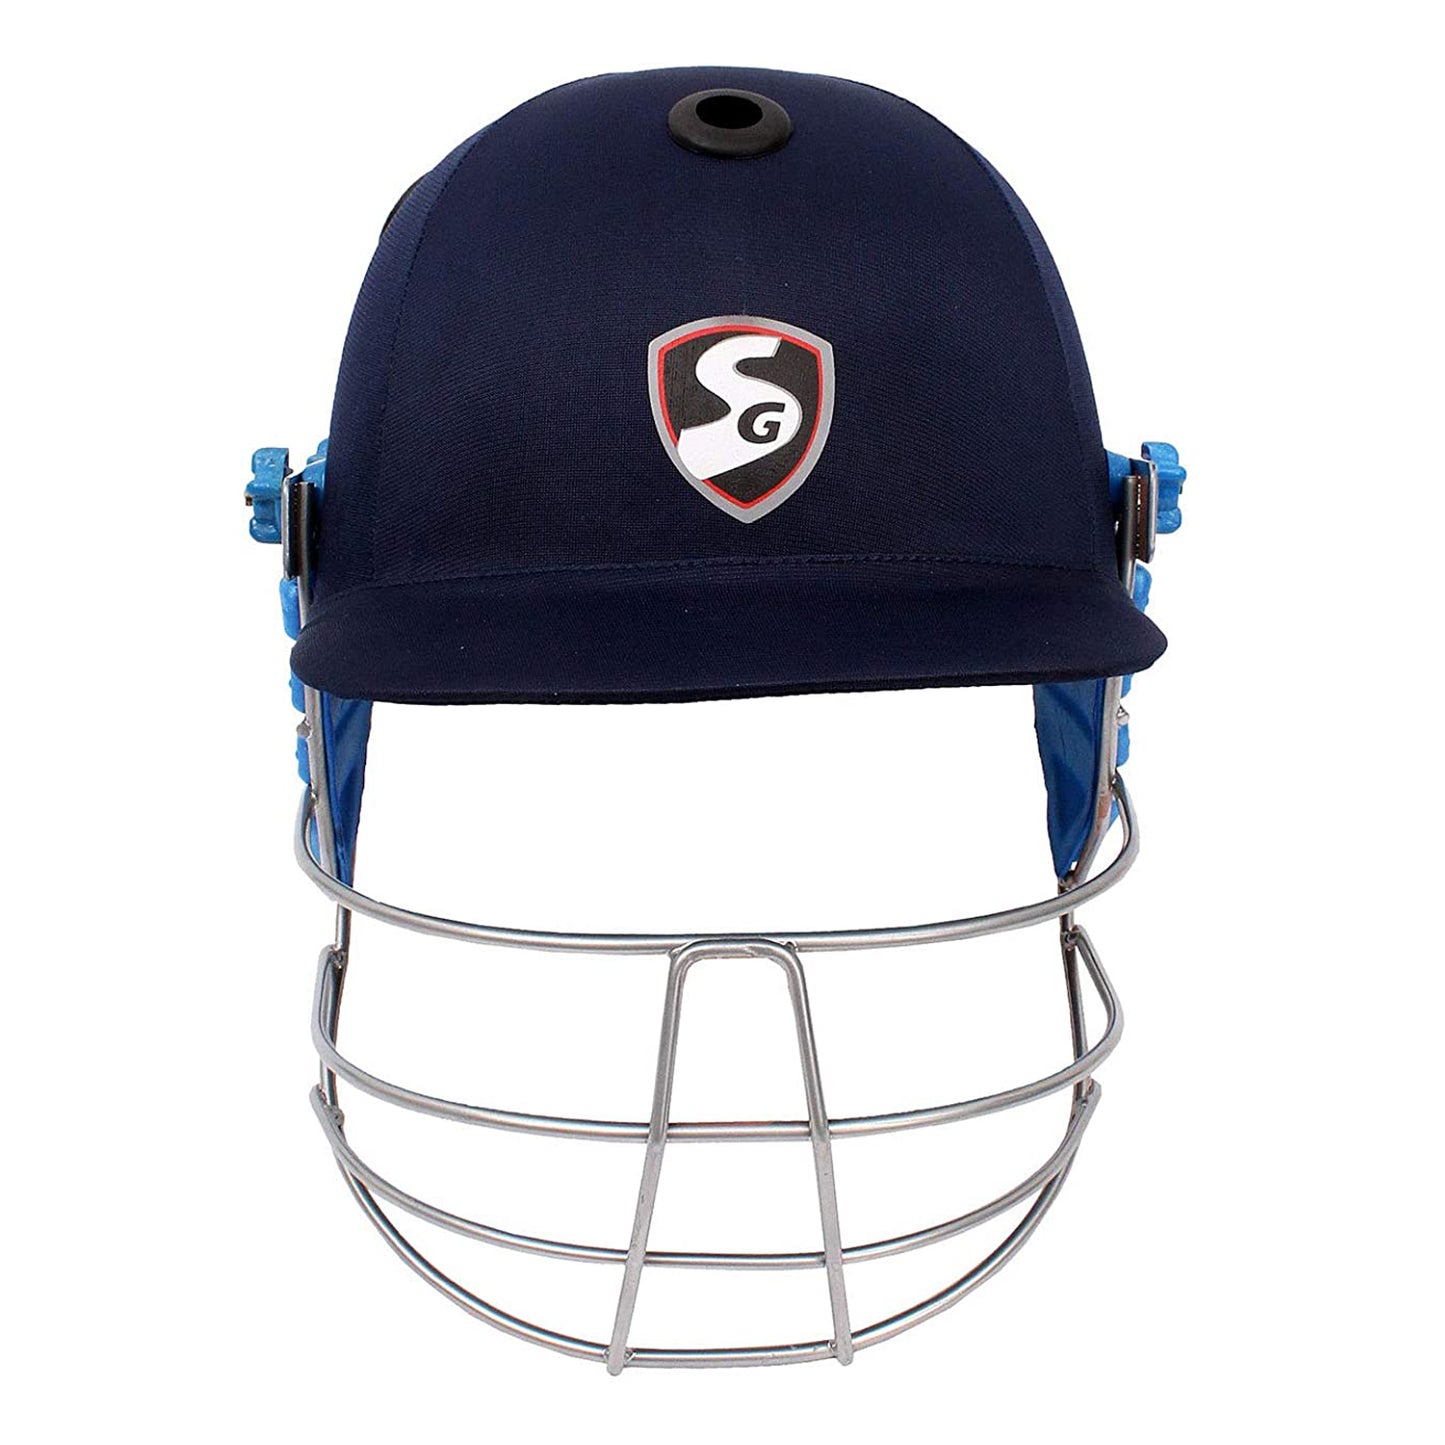 SG Carbofab Cricket Helmet - Best Price online Prokicksports.com